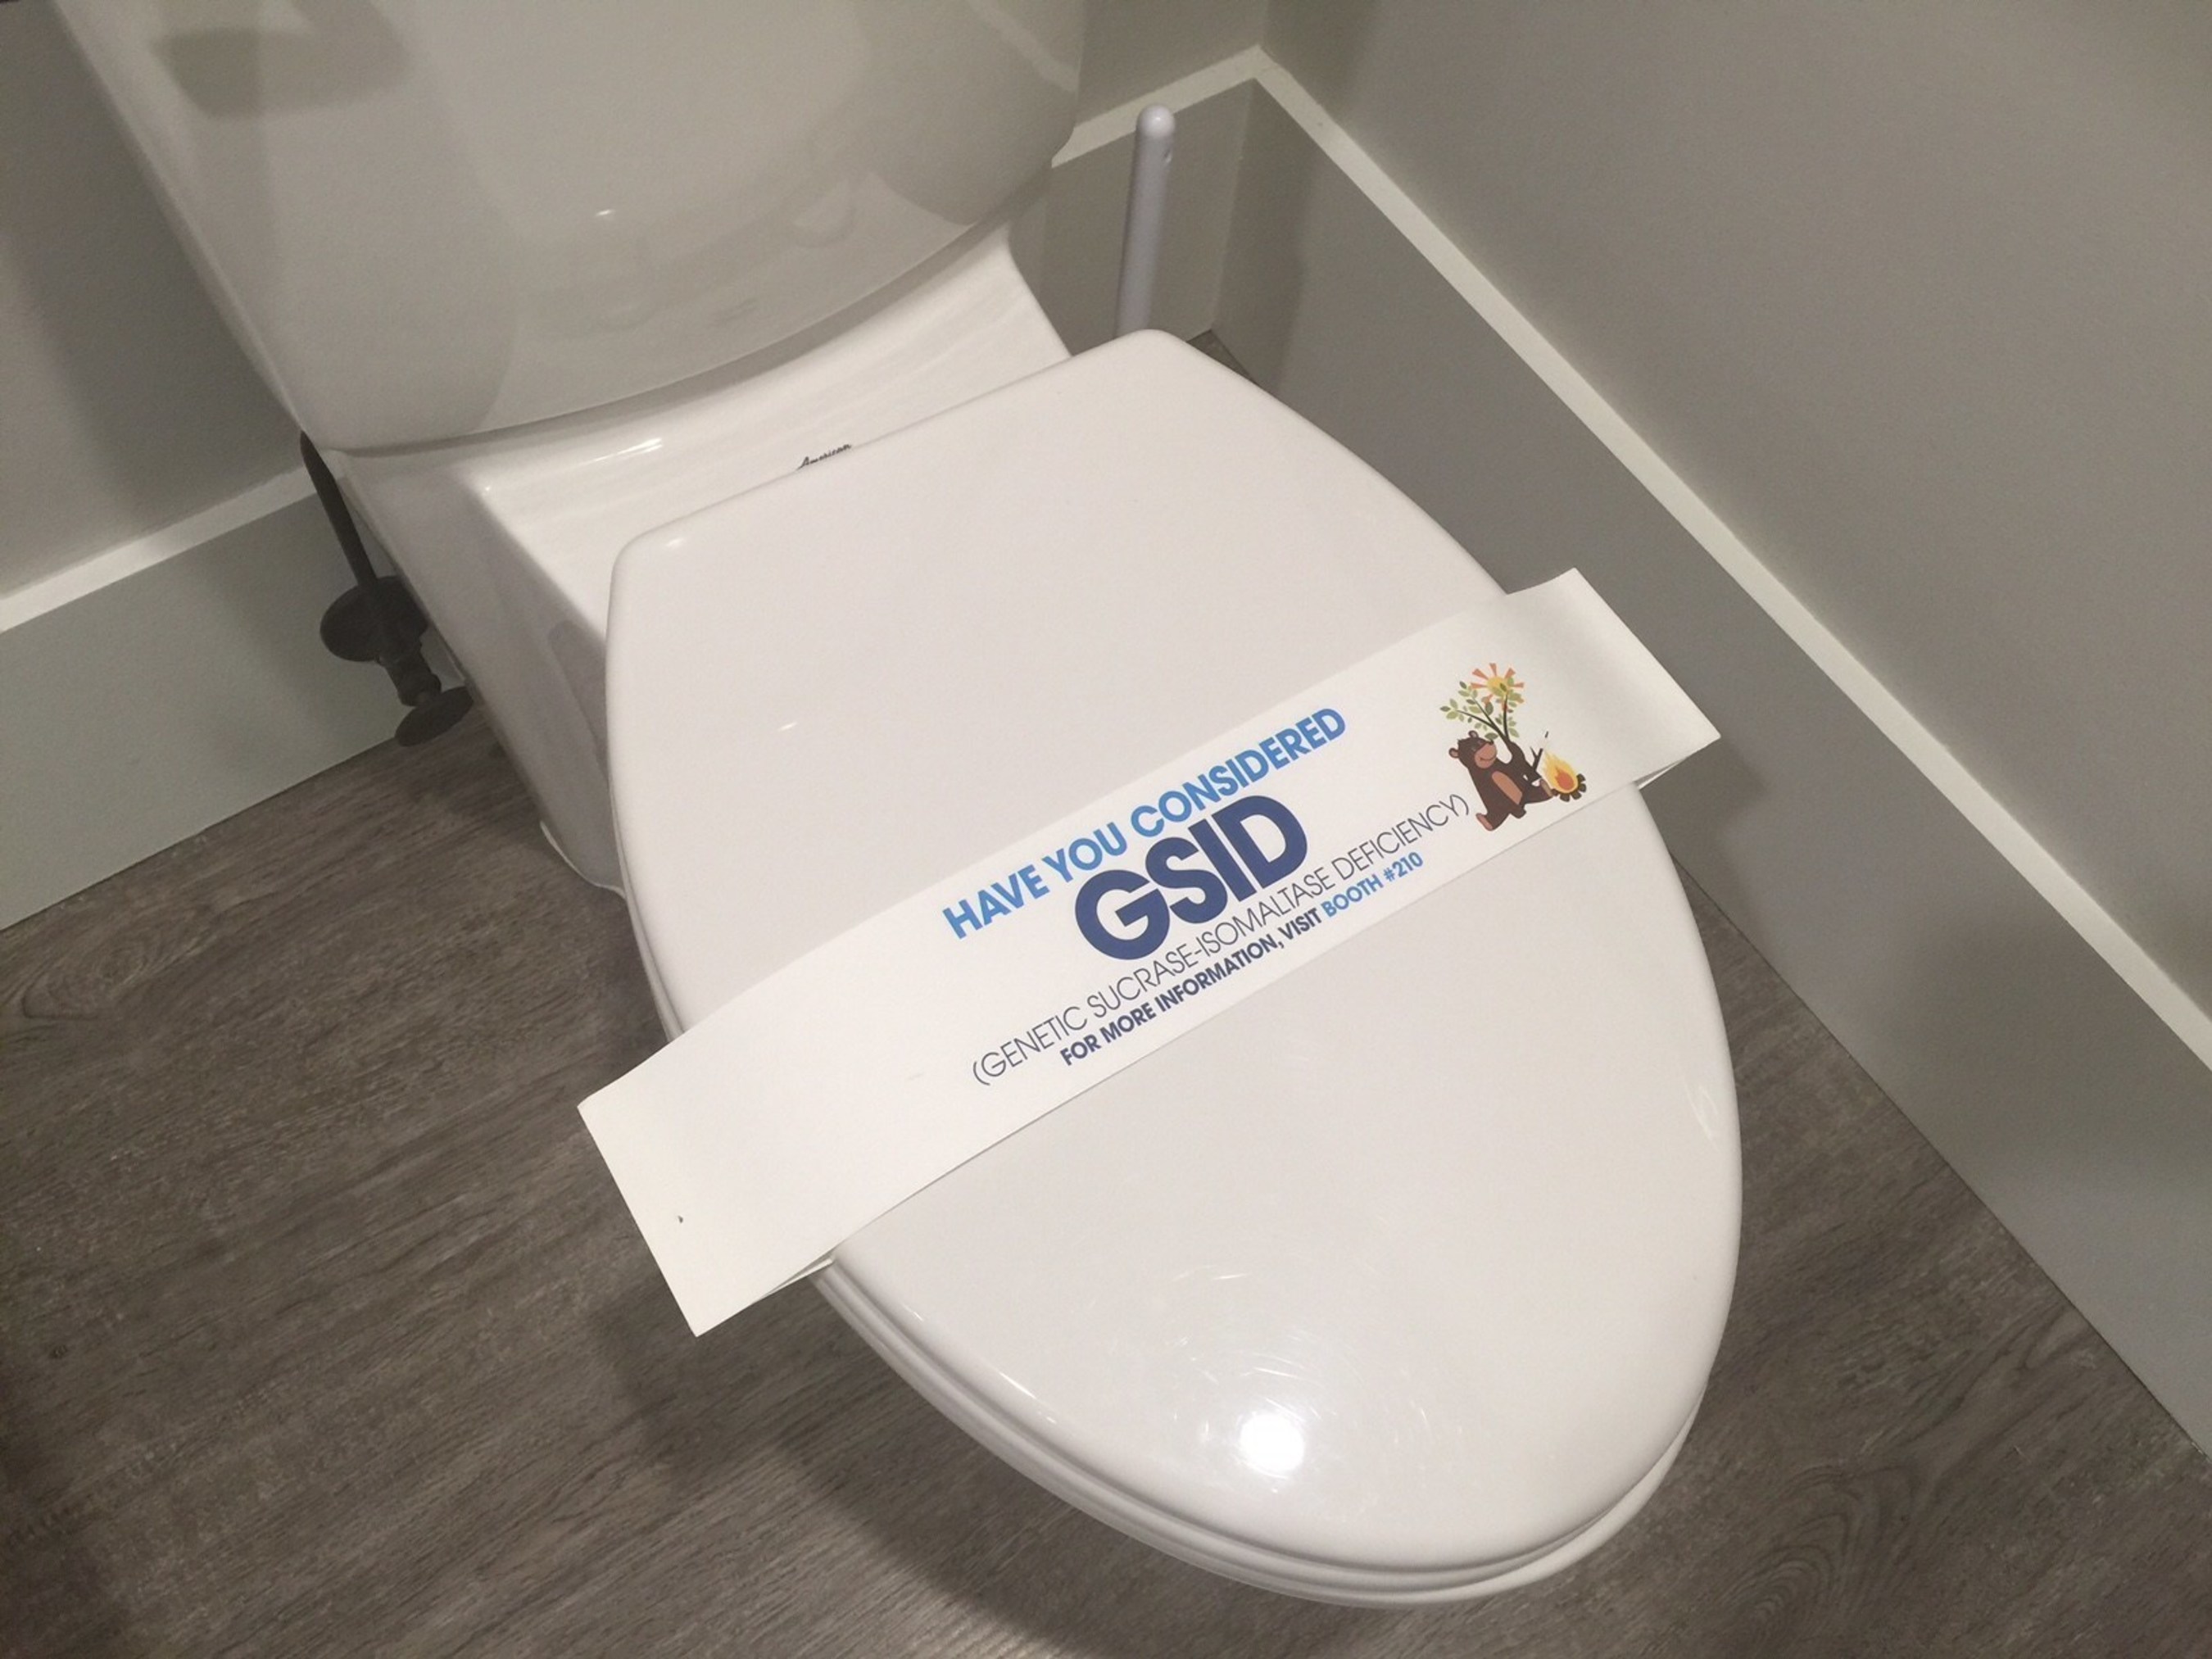 QOL's Branded Biodegradable Toilet Seat Wraps